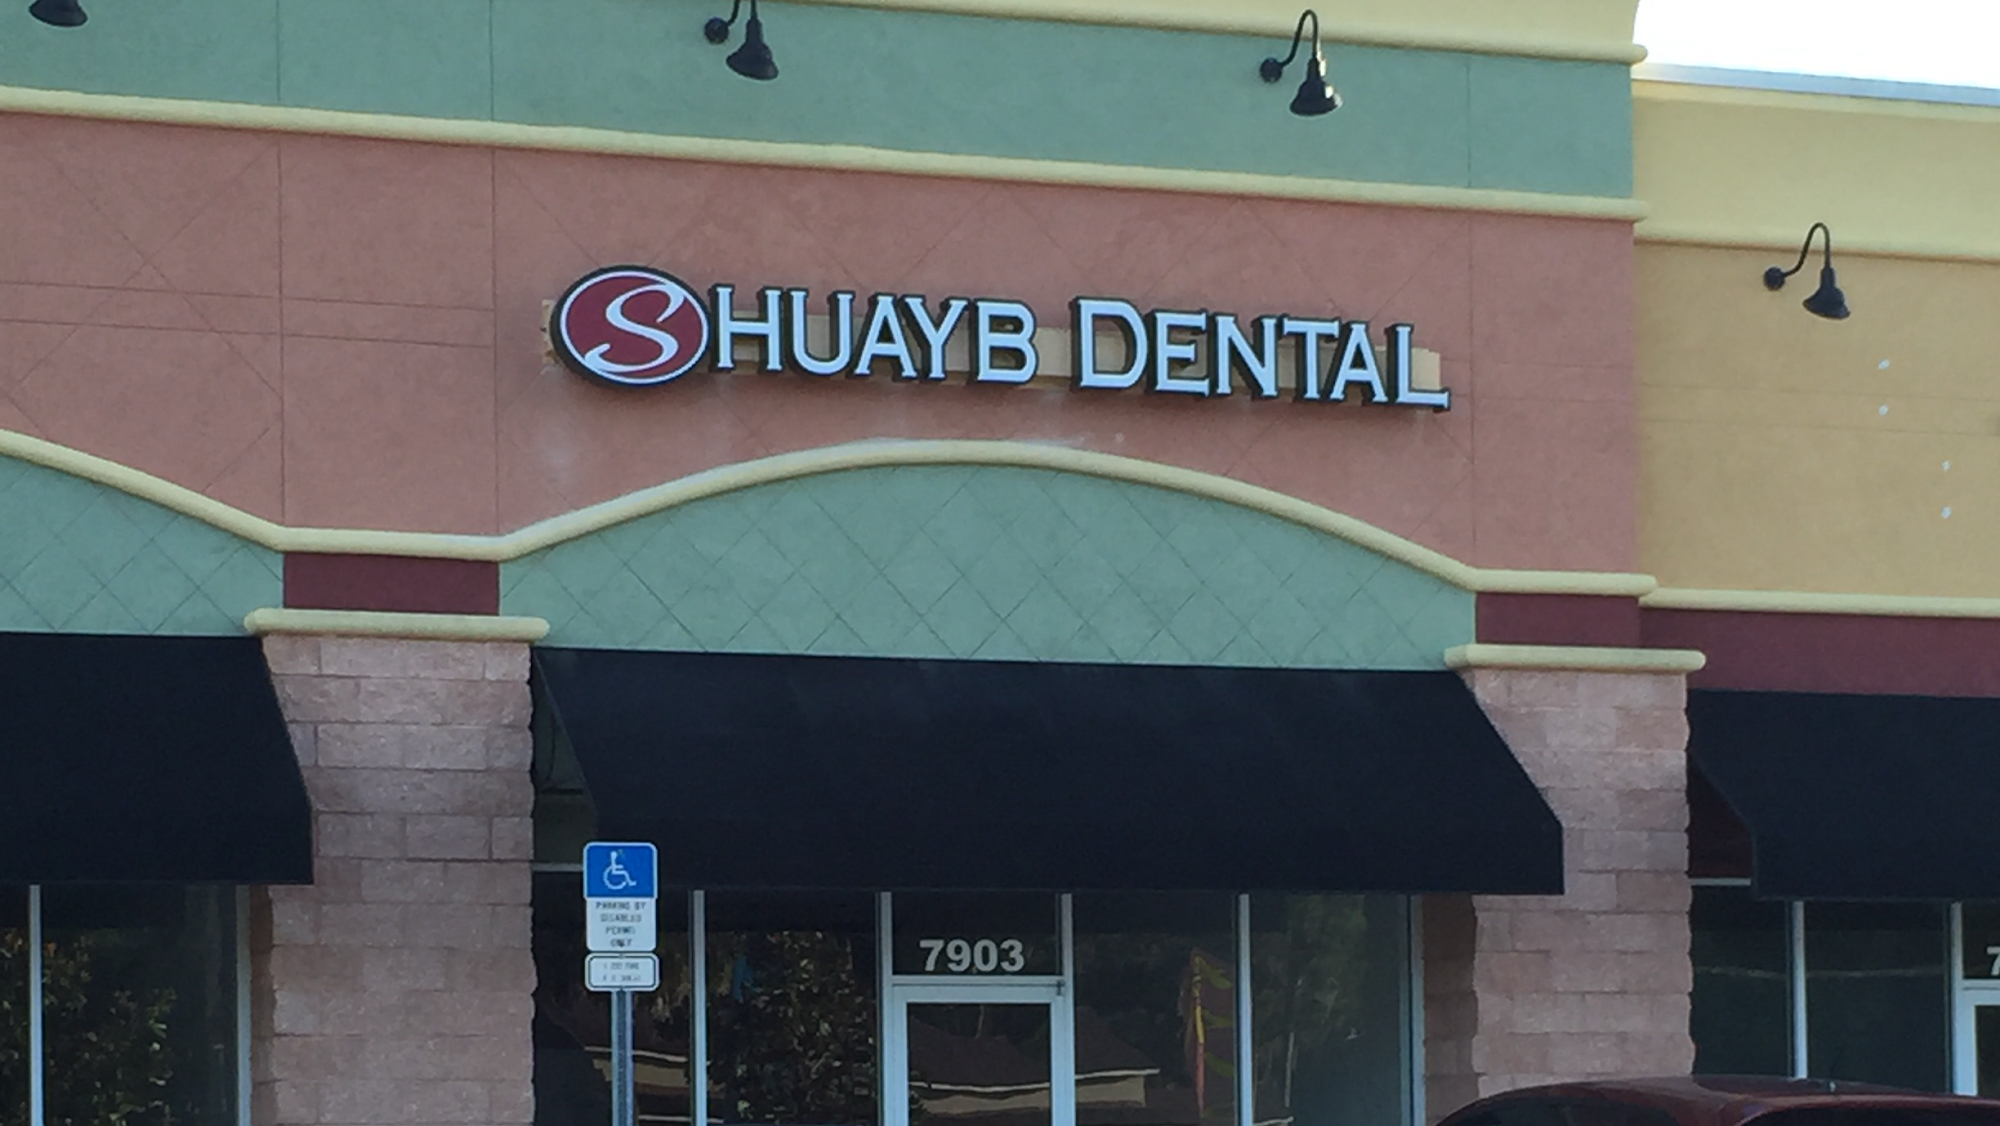 Shuayb Dental Institute - Crystal River